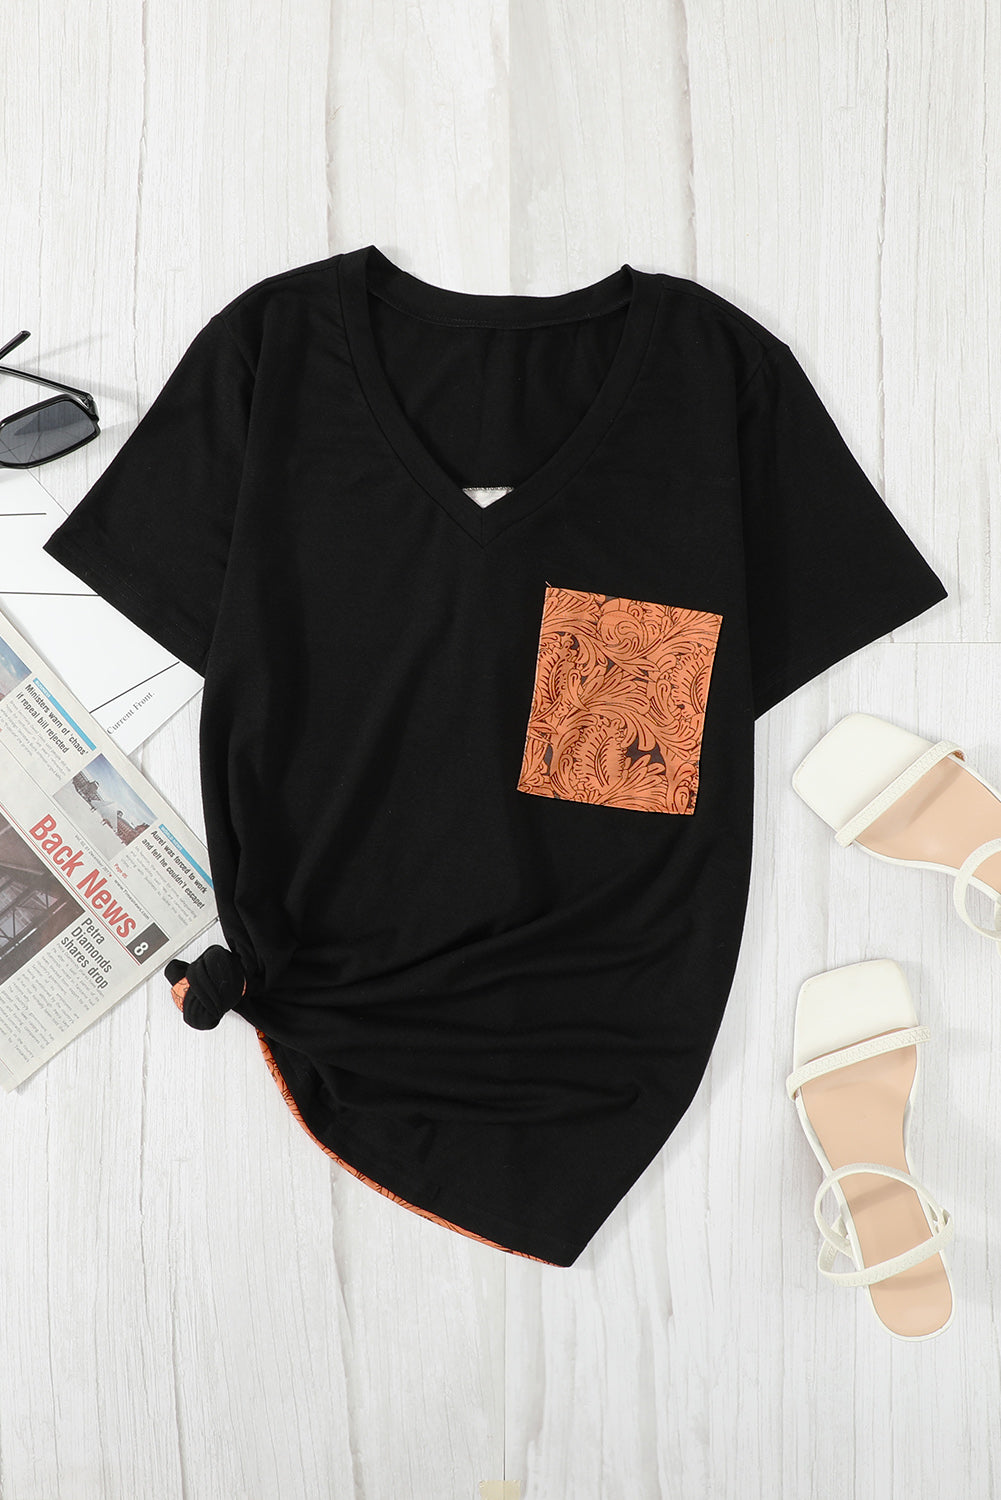 Black Women's Leopard Printed Short Sleeve T-Shirt Blouse LC253578-102